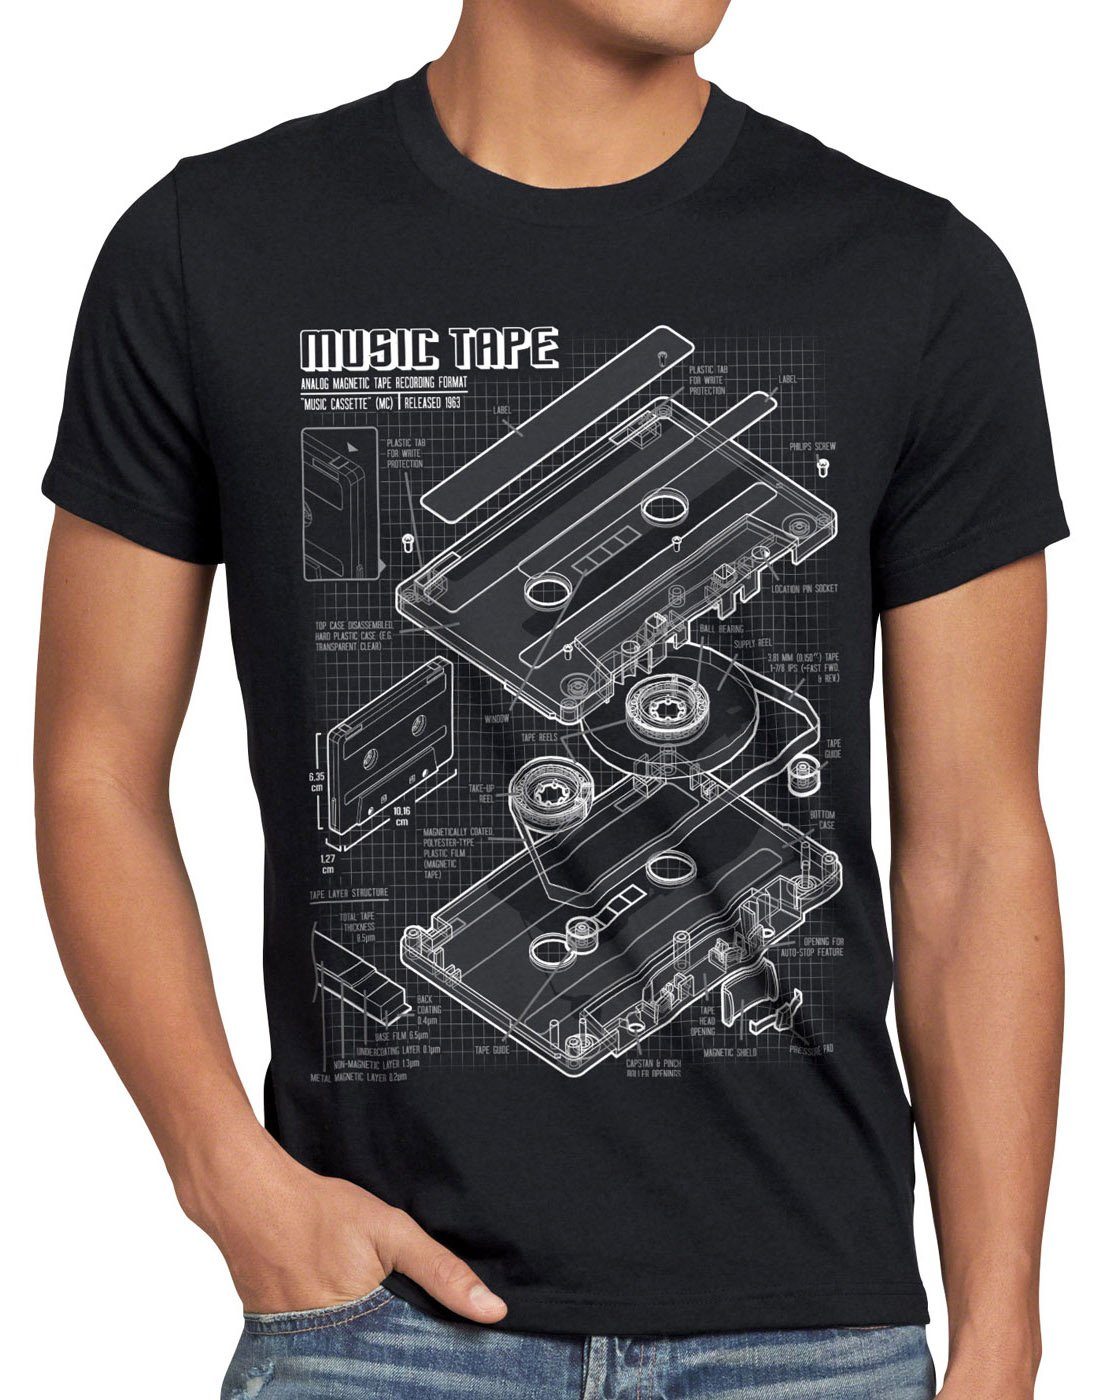 style3 Print-Shirt Kassette turntable analog DJ retro ndw musik TAPE disko schwarz MC Herren T-Shirt disco